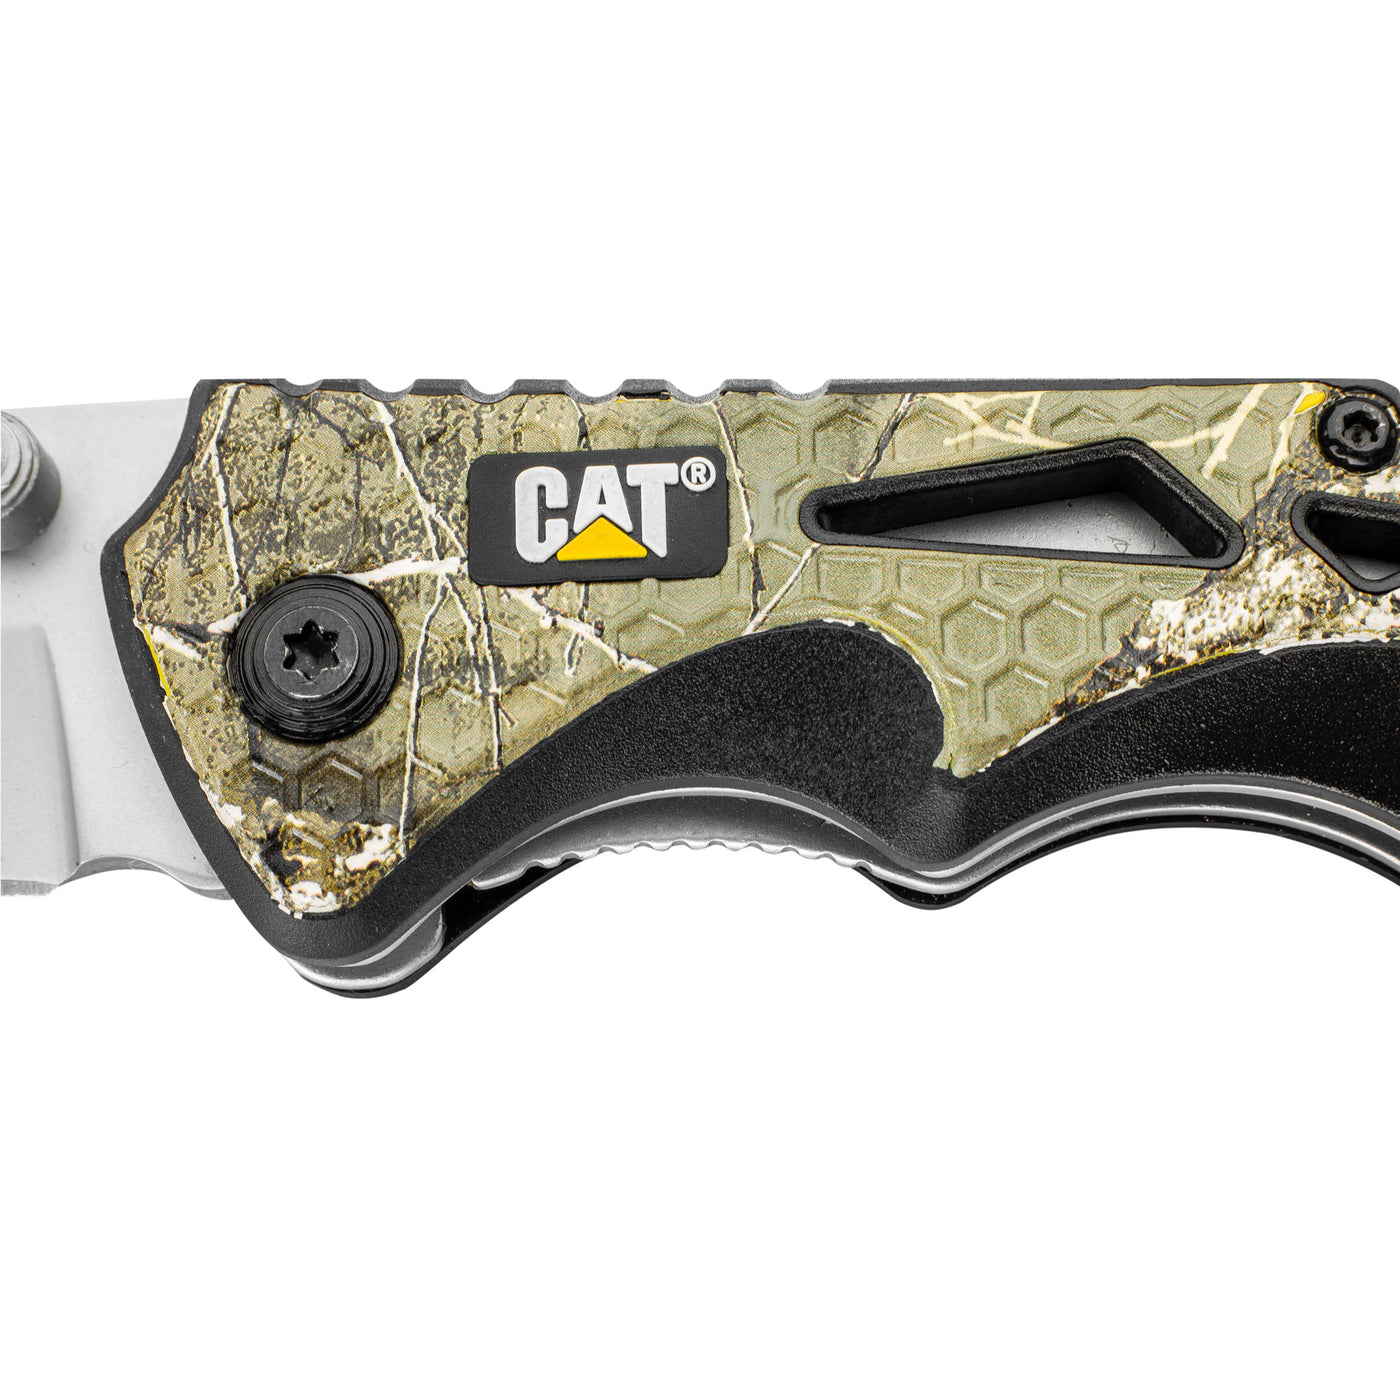 CAT Multi-Tool & Knife Set - RackUp+Go